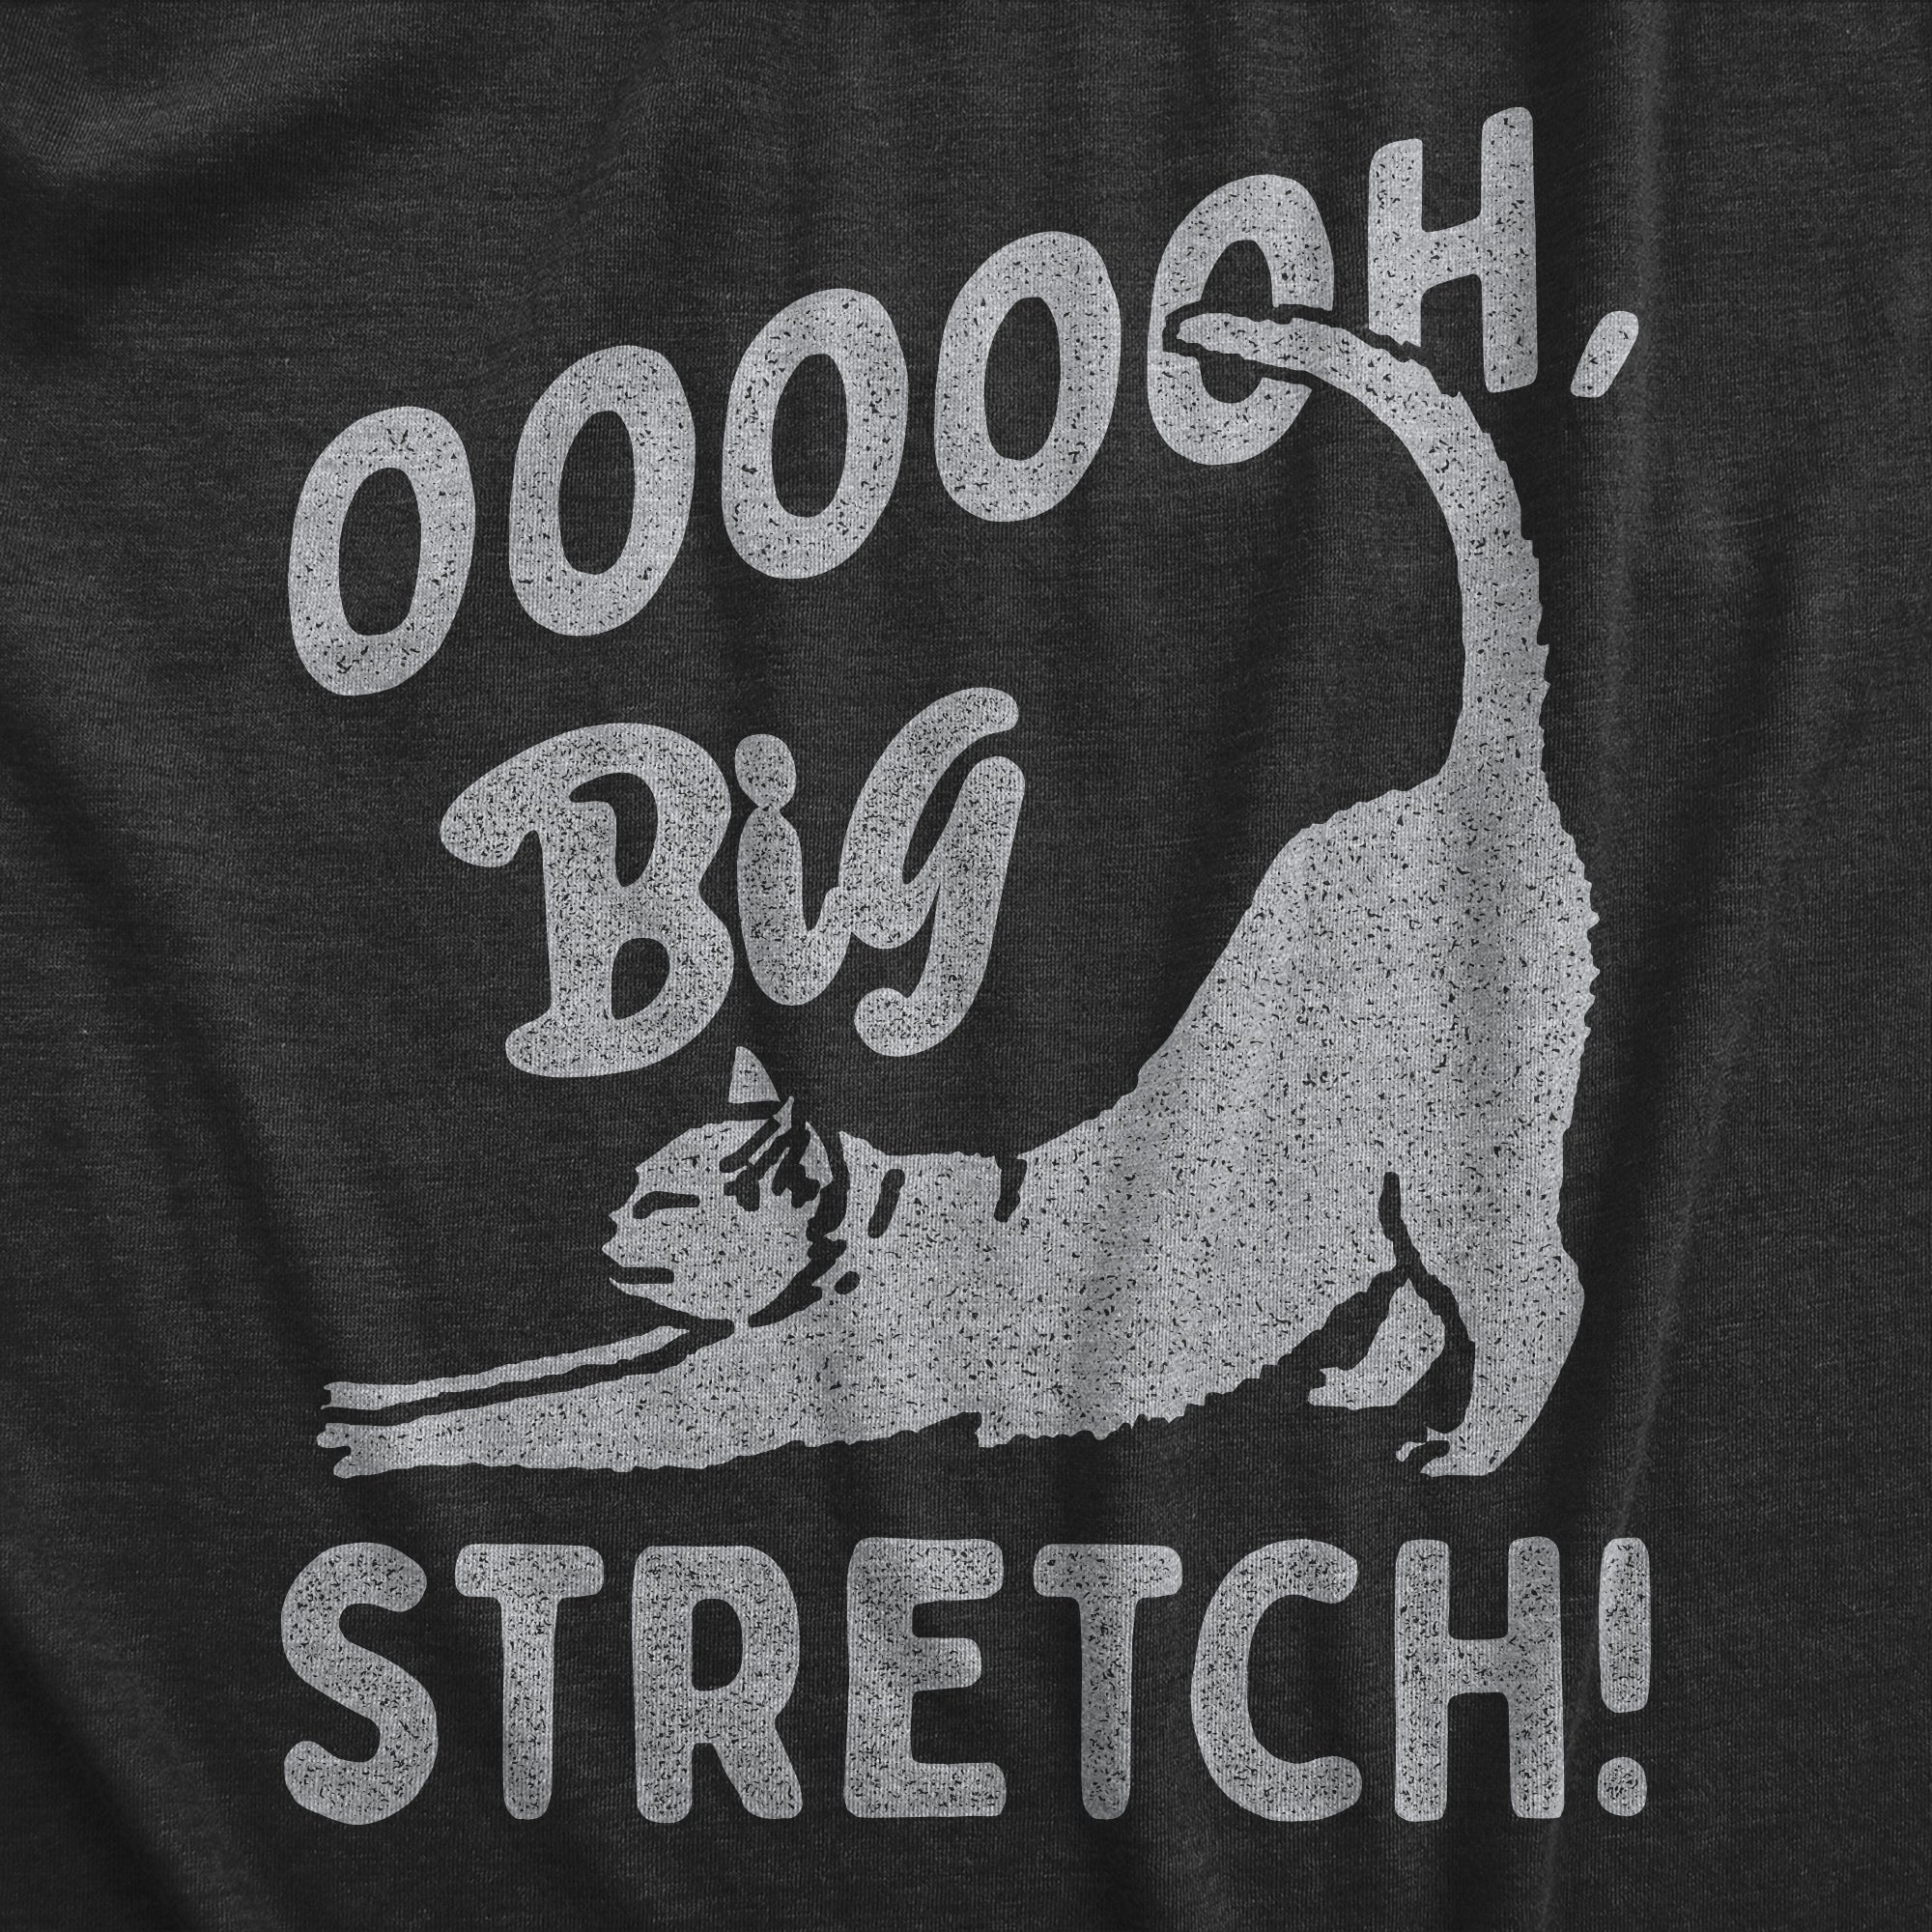 Funny Heather Black - STRETCH OOOOOH Big Stretch Cat Mens T Shirt Nerdy cat Tee